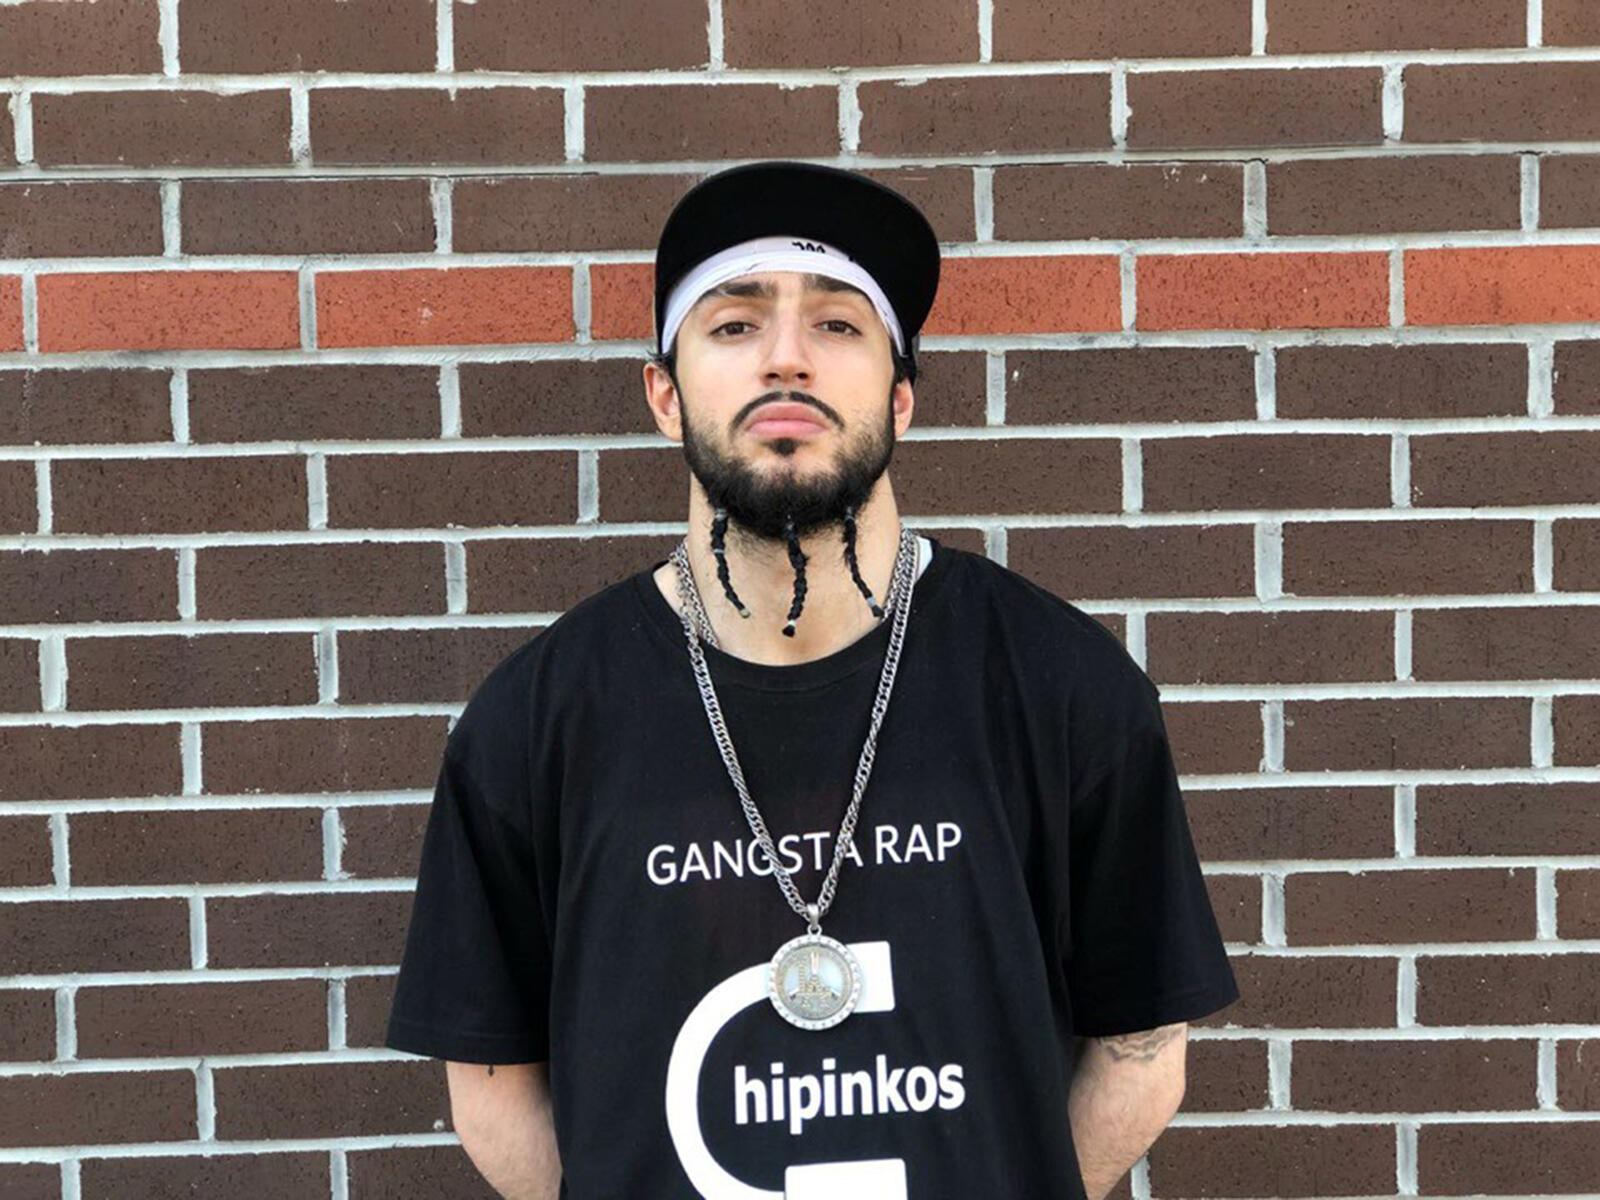 Free photo Gangsta rapper standing near a brick wall